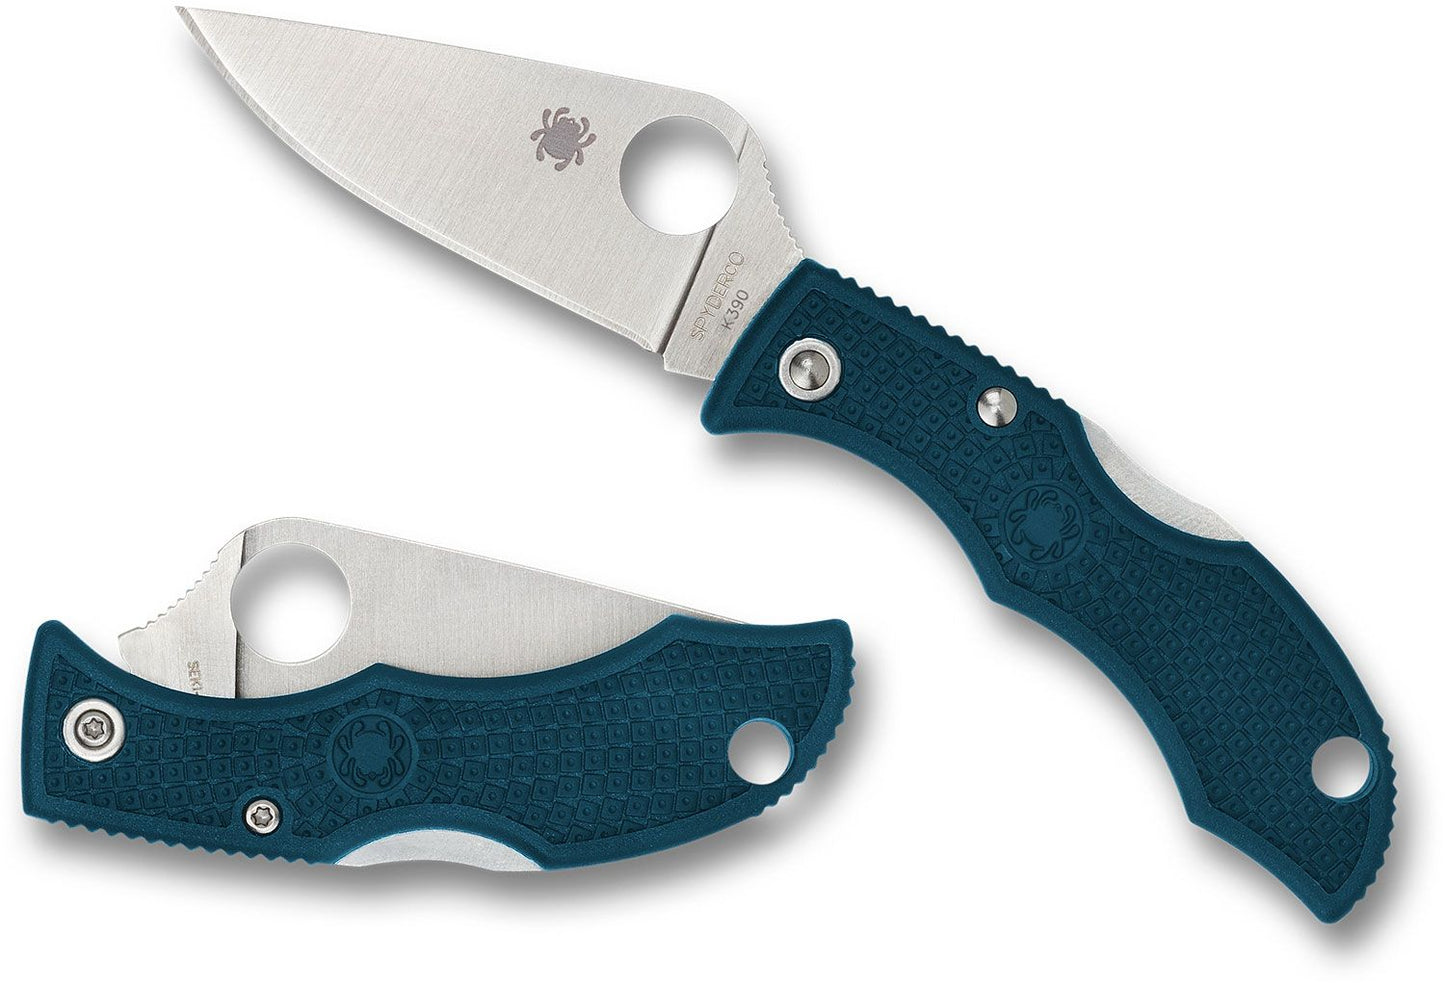 Spyderco Ladybug 3 Key Ring Knife 1.97" K390 Satin Plain Blade, Blue FRN Handles - LFP3K390 Seti